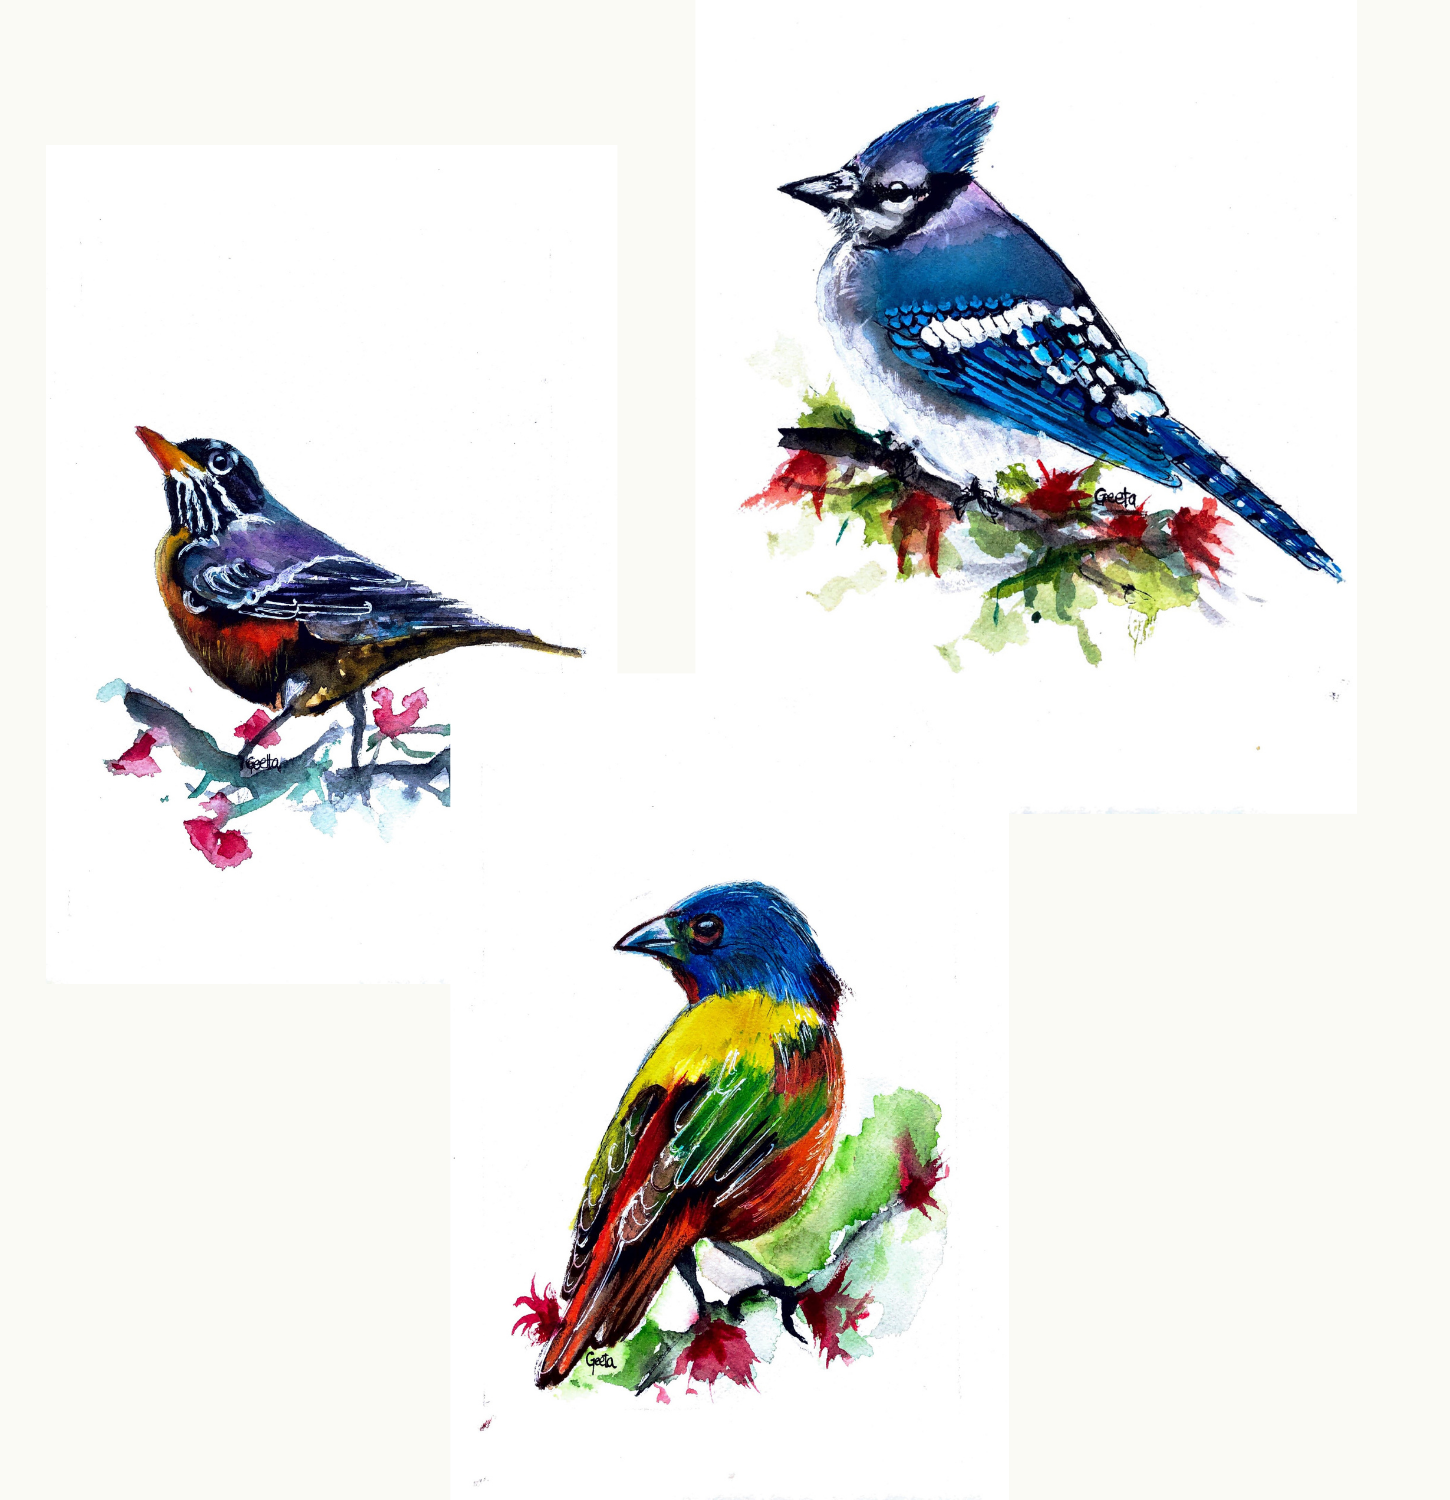 “The Three Birds” – By Geeta Pathak